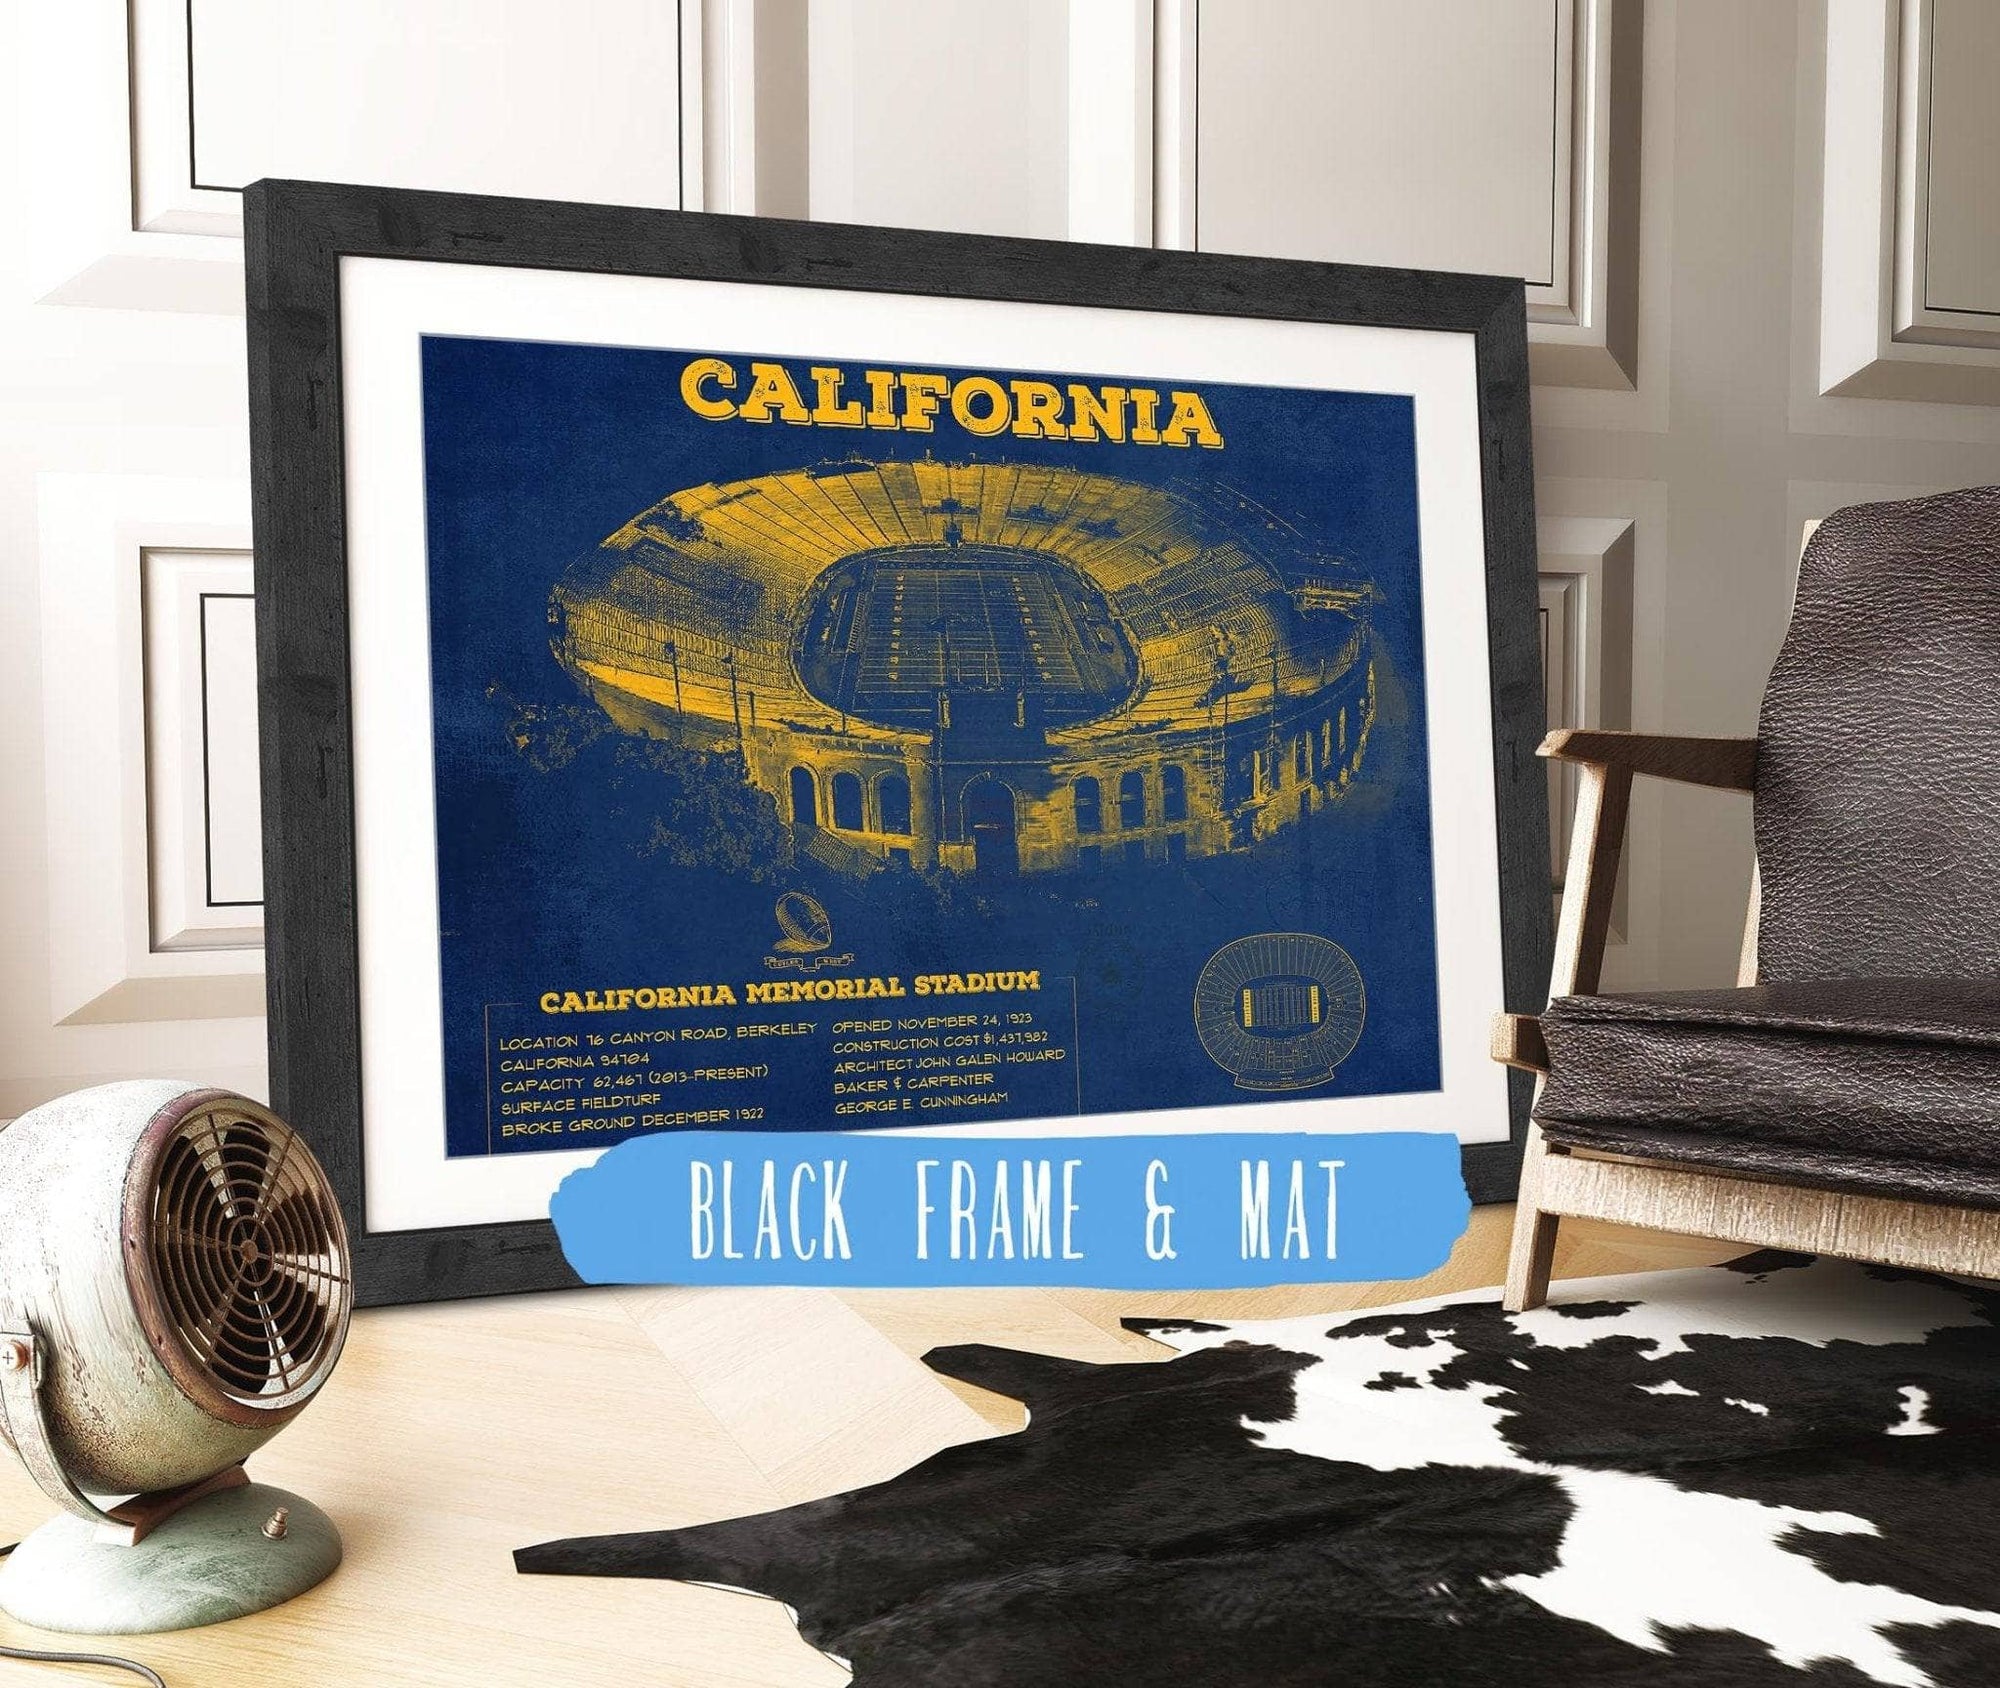 Cutler West College Football Collection 14" x 11" / Black Frame & Mat California Memorial Stadium Poster - University of California Bears Vintage Stadium & Blueprint Art Print 750877871_45241